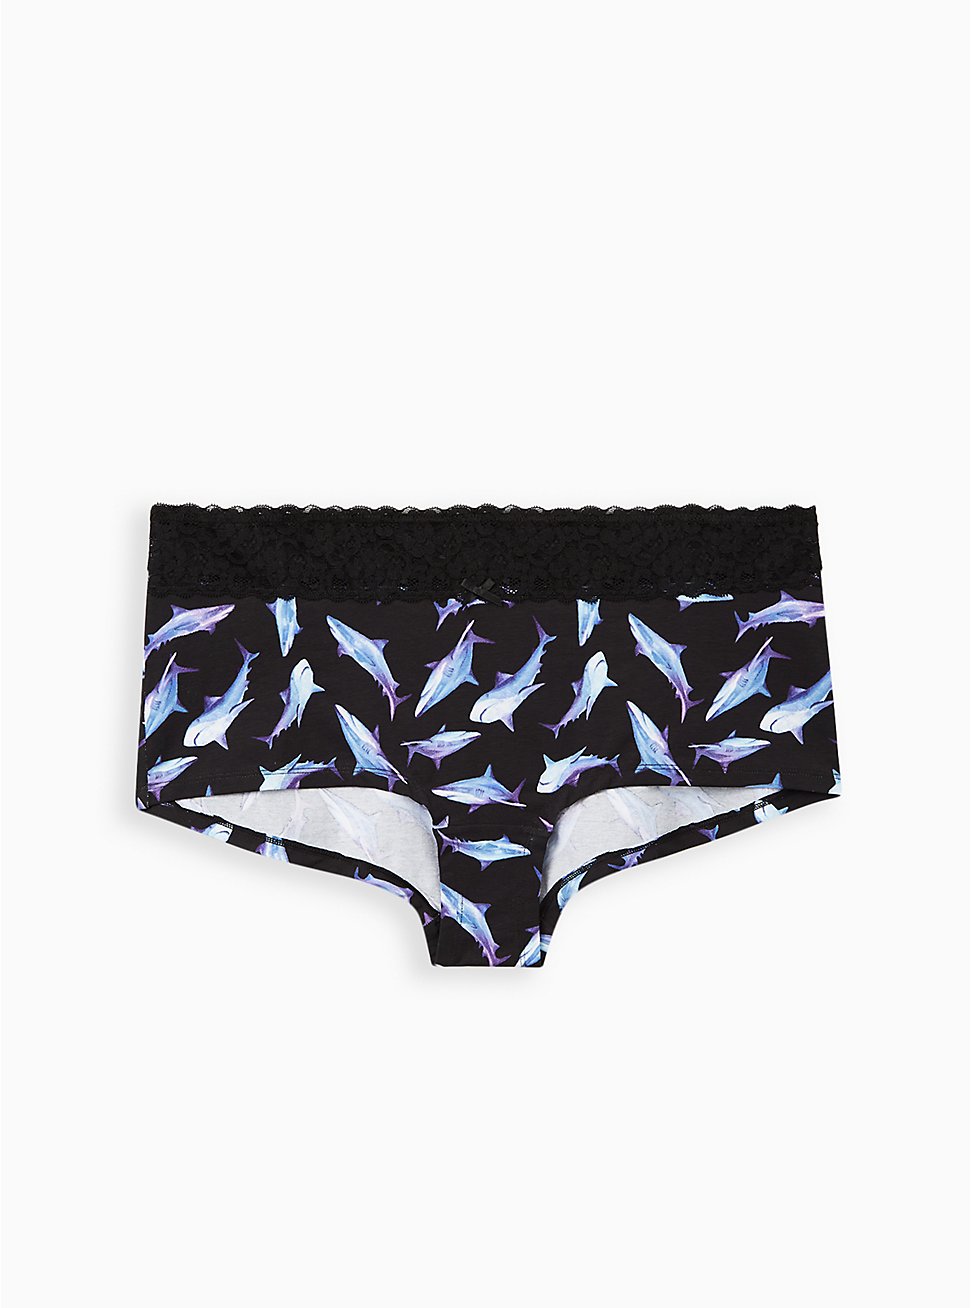 Plus Size Black Swimming Sharks Wide Lace Cotton Boyshort Panty, Swimming Sharks- BLACK, hi-res